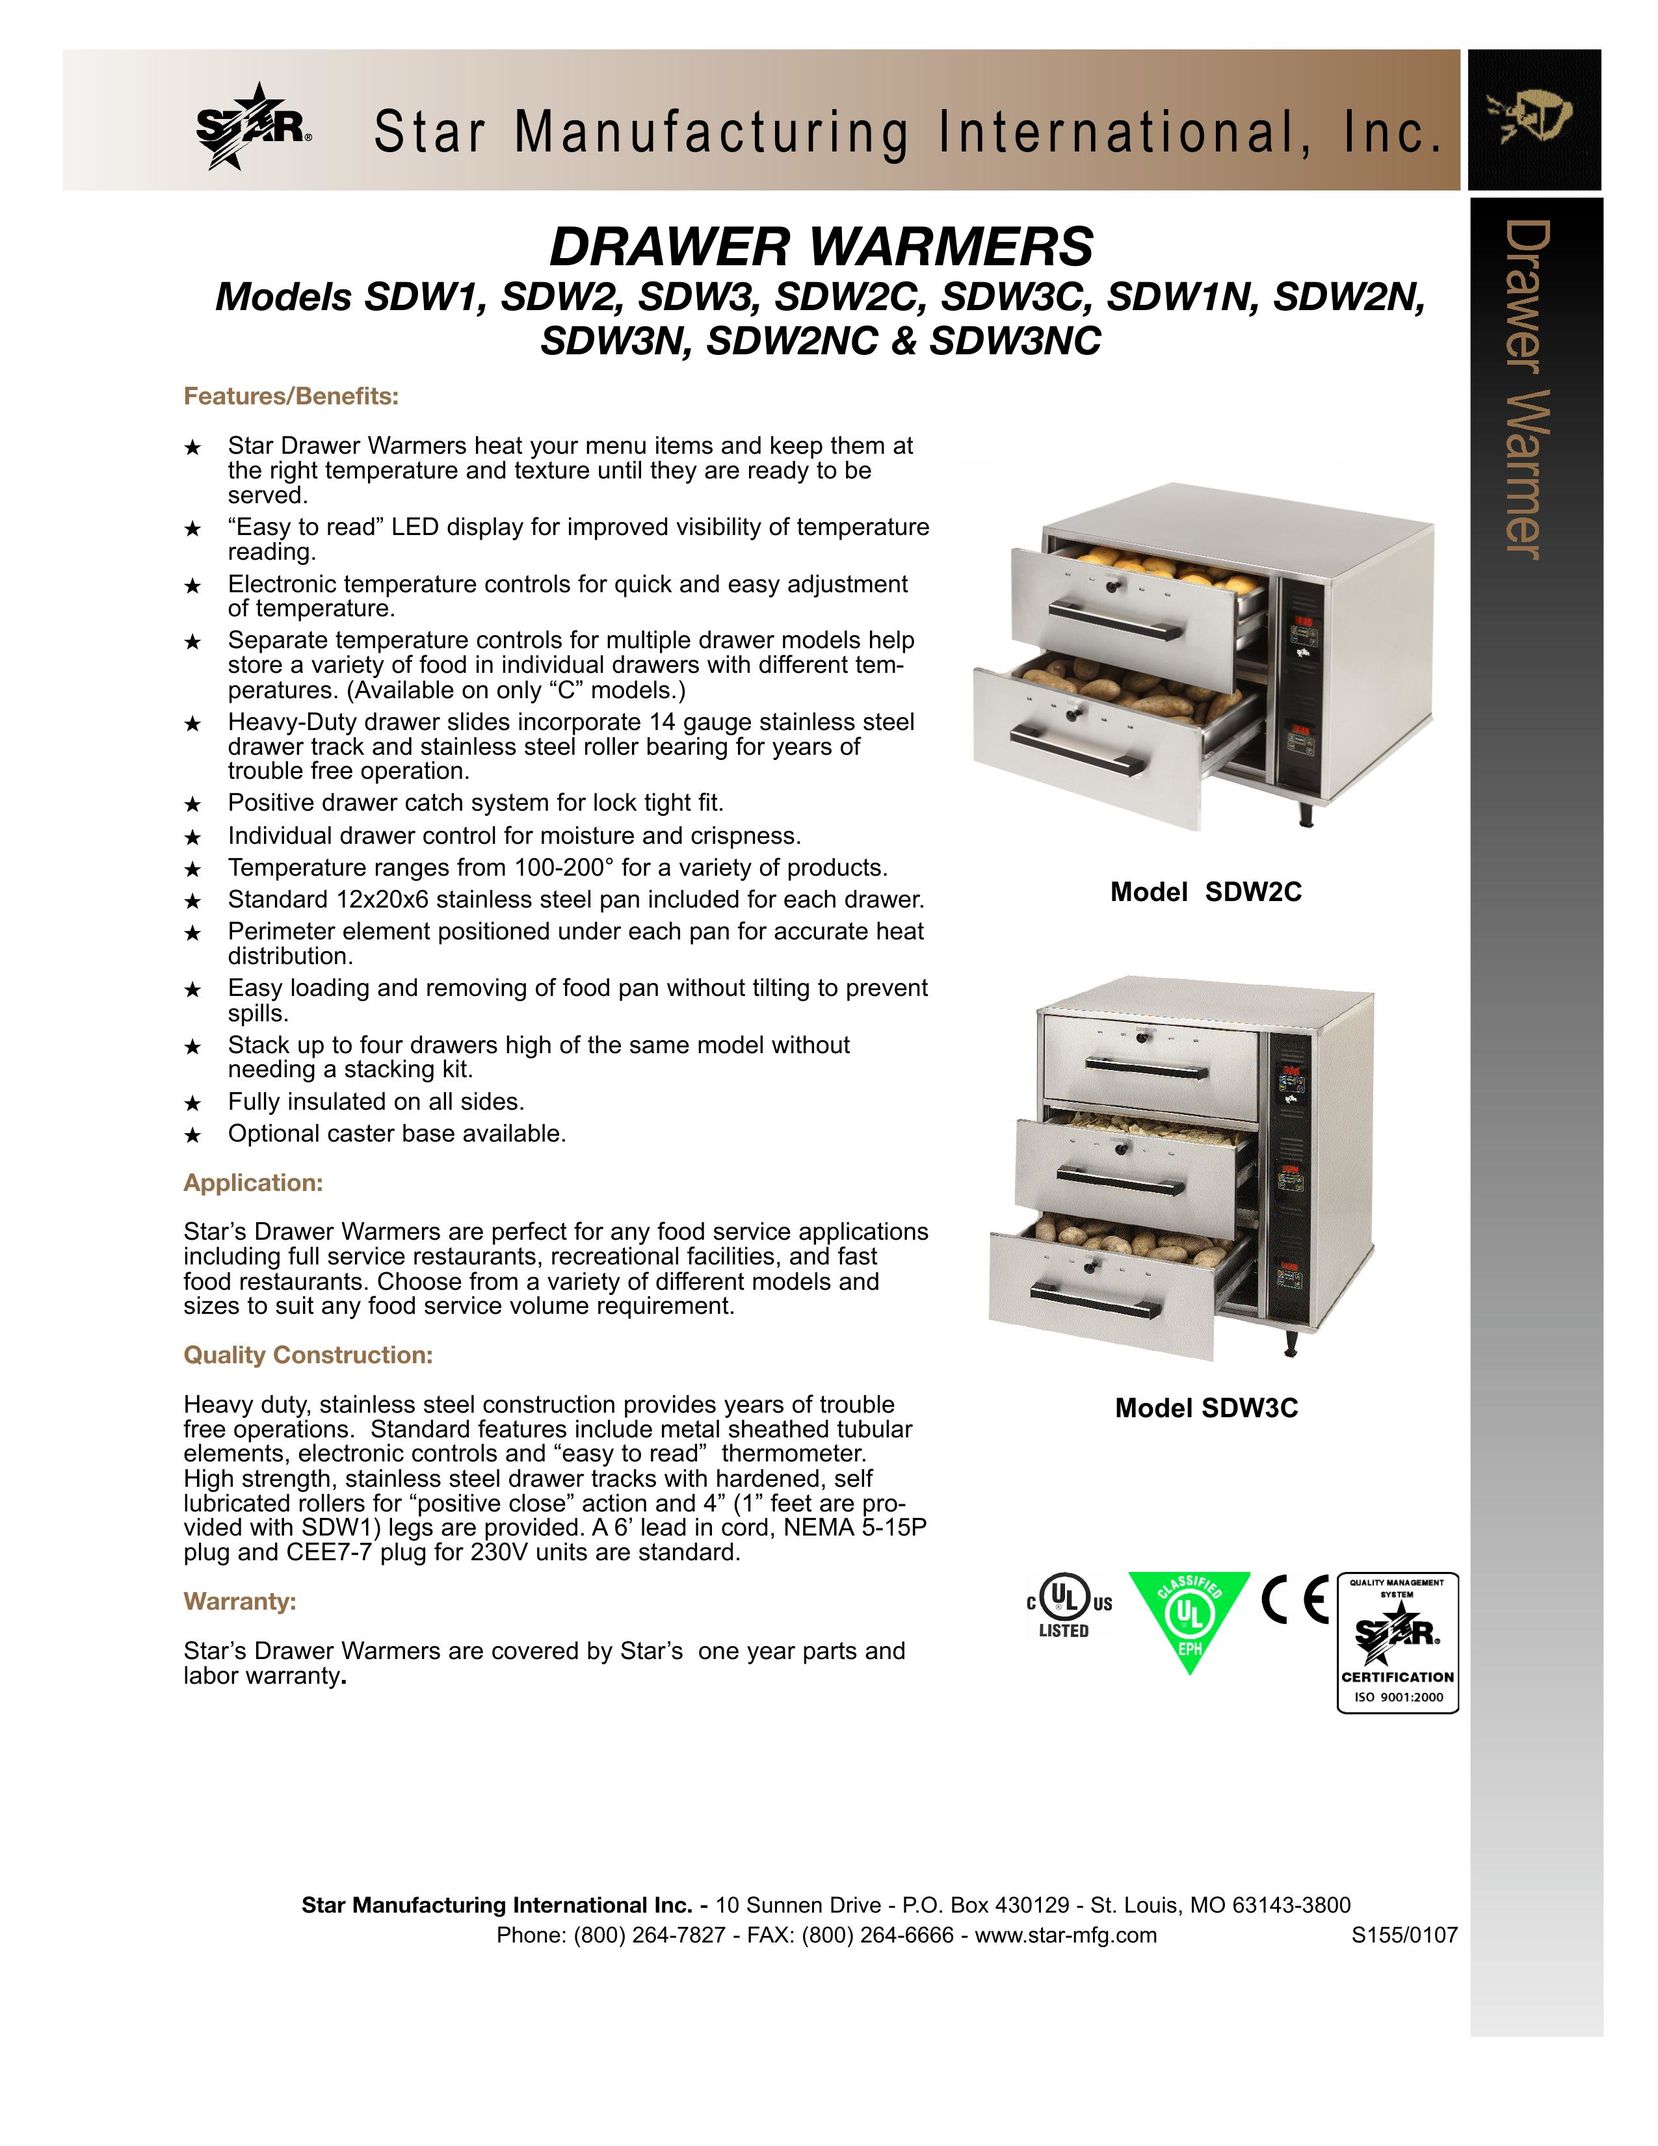 Star Manufacturing SDW3N Food Warmer User Manual